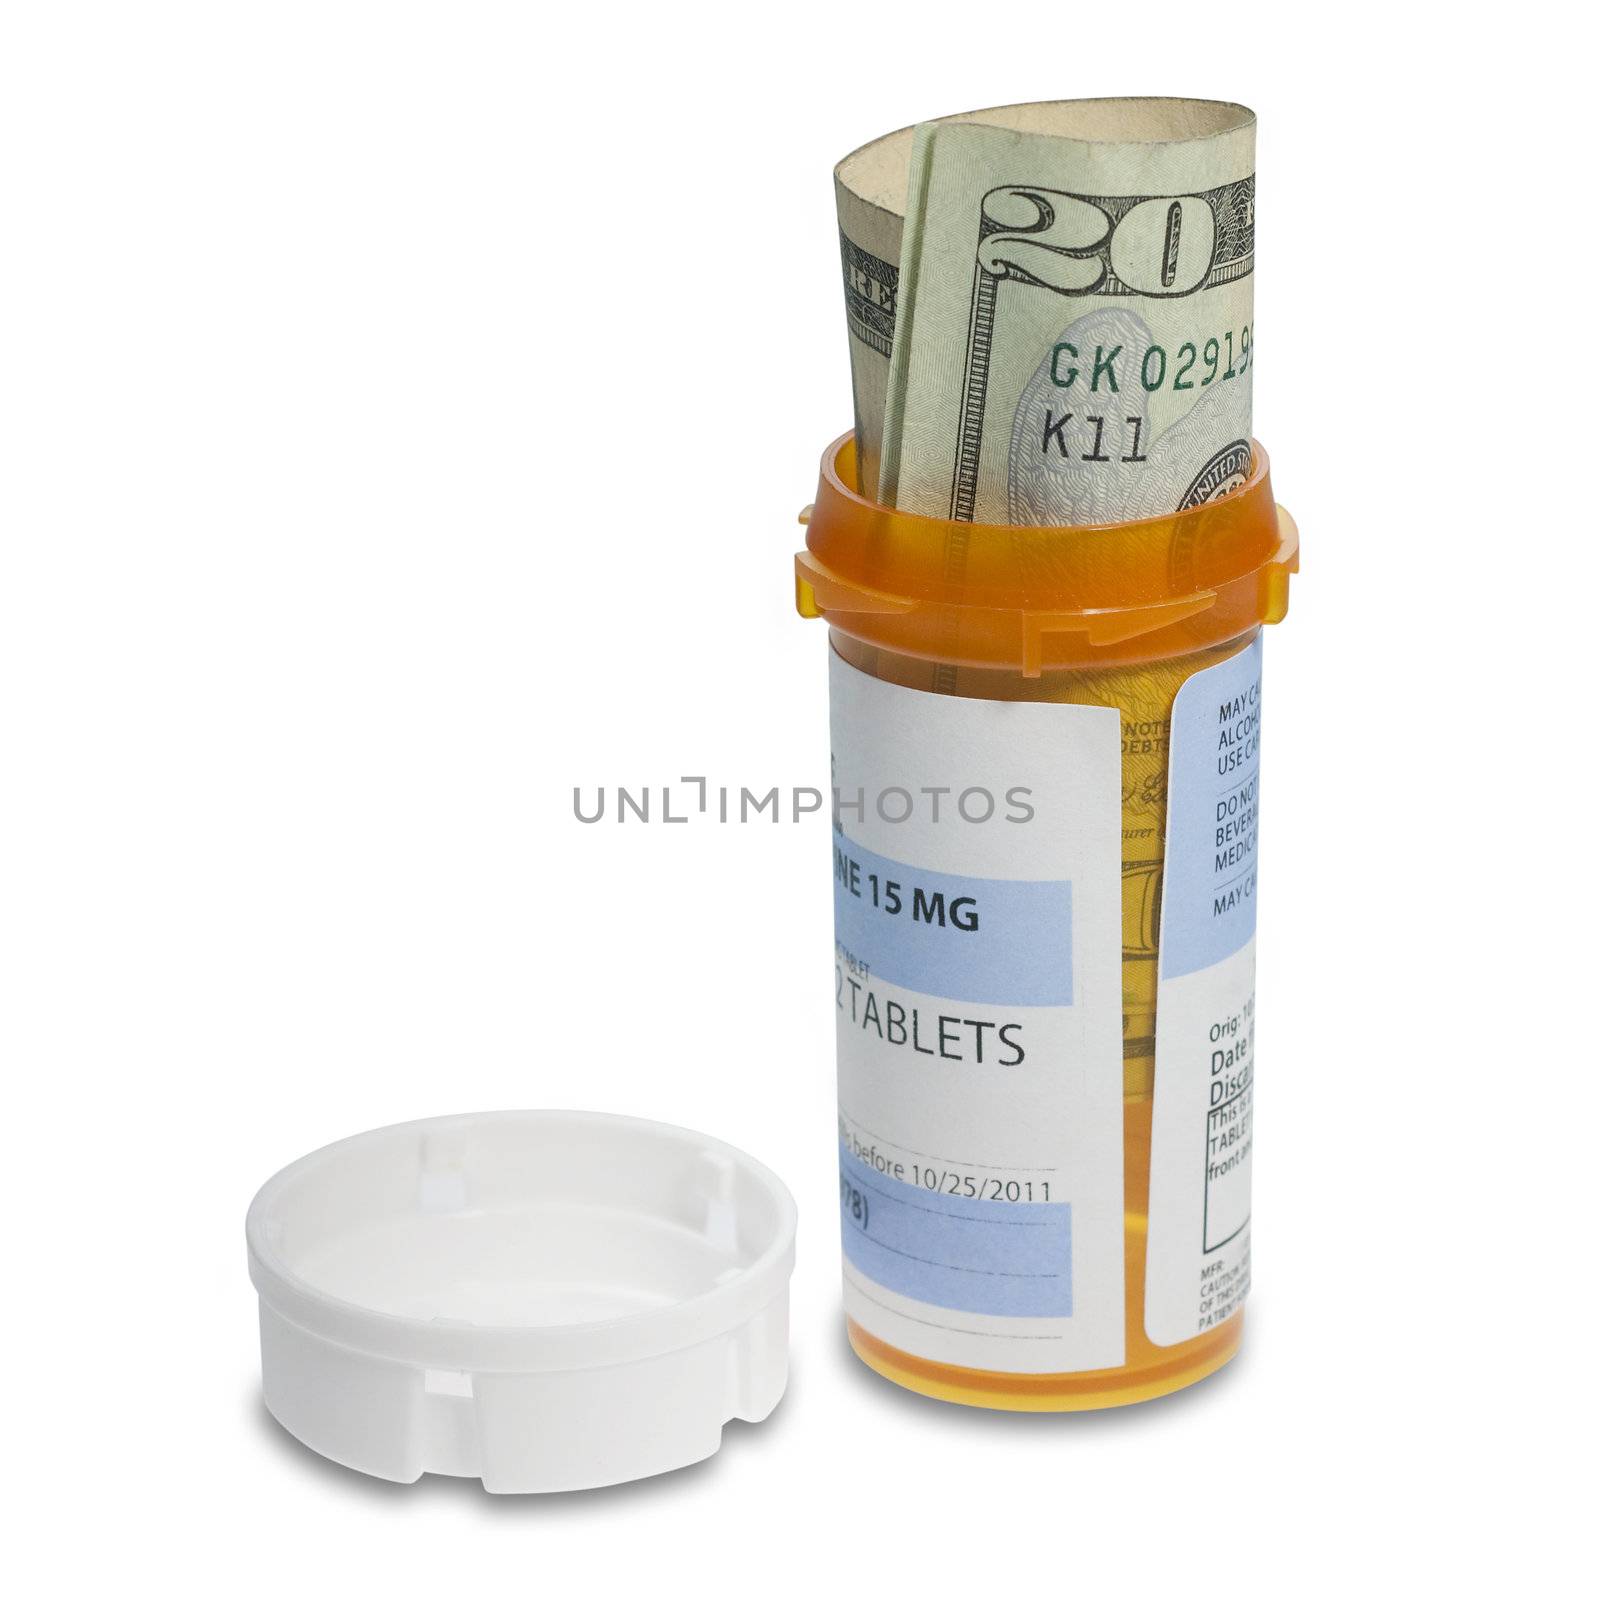 Prescription bottle with bills inside shot to illustrate the cost of medicine